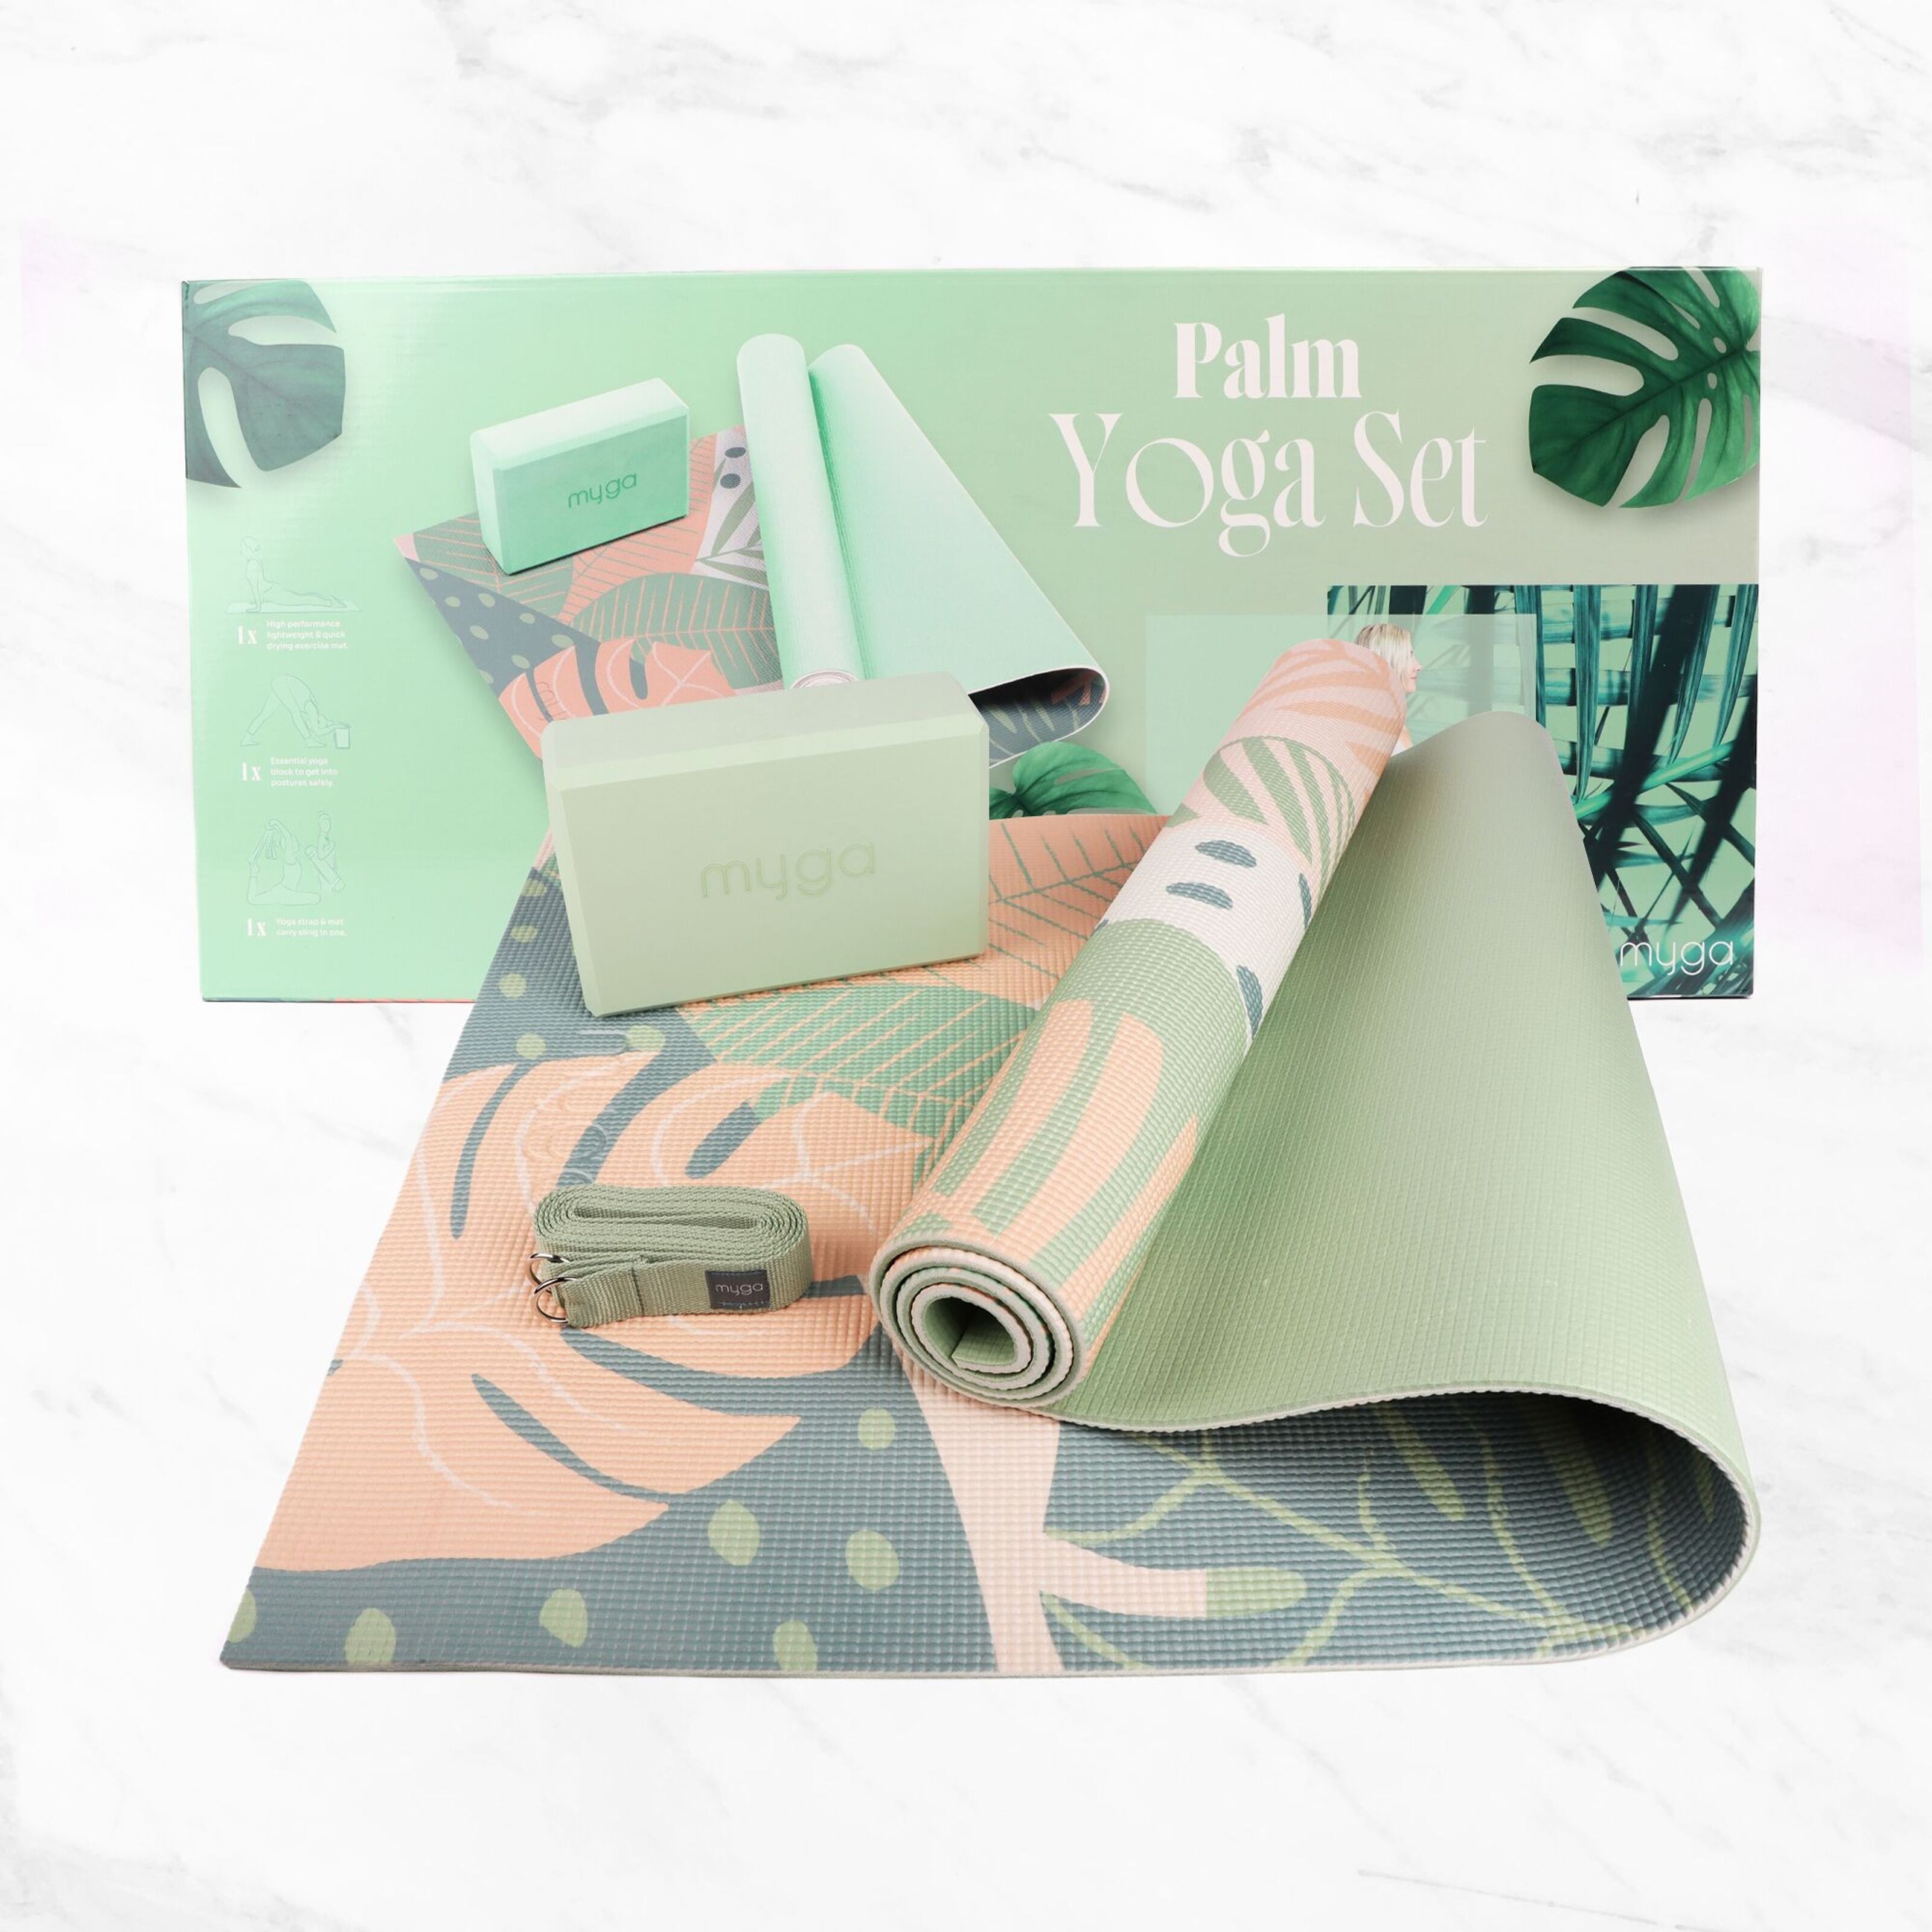 Ankorstore x Myga - Palm Yoga Starter Kit